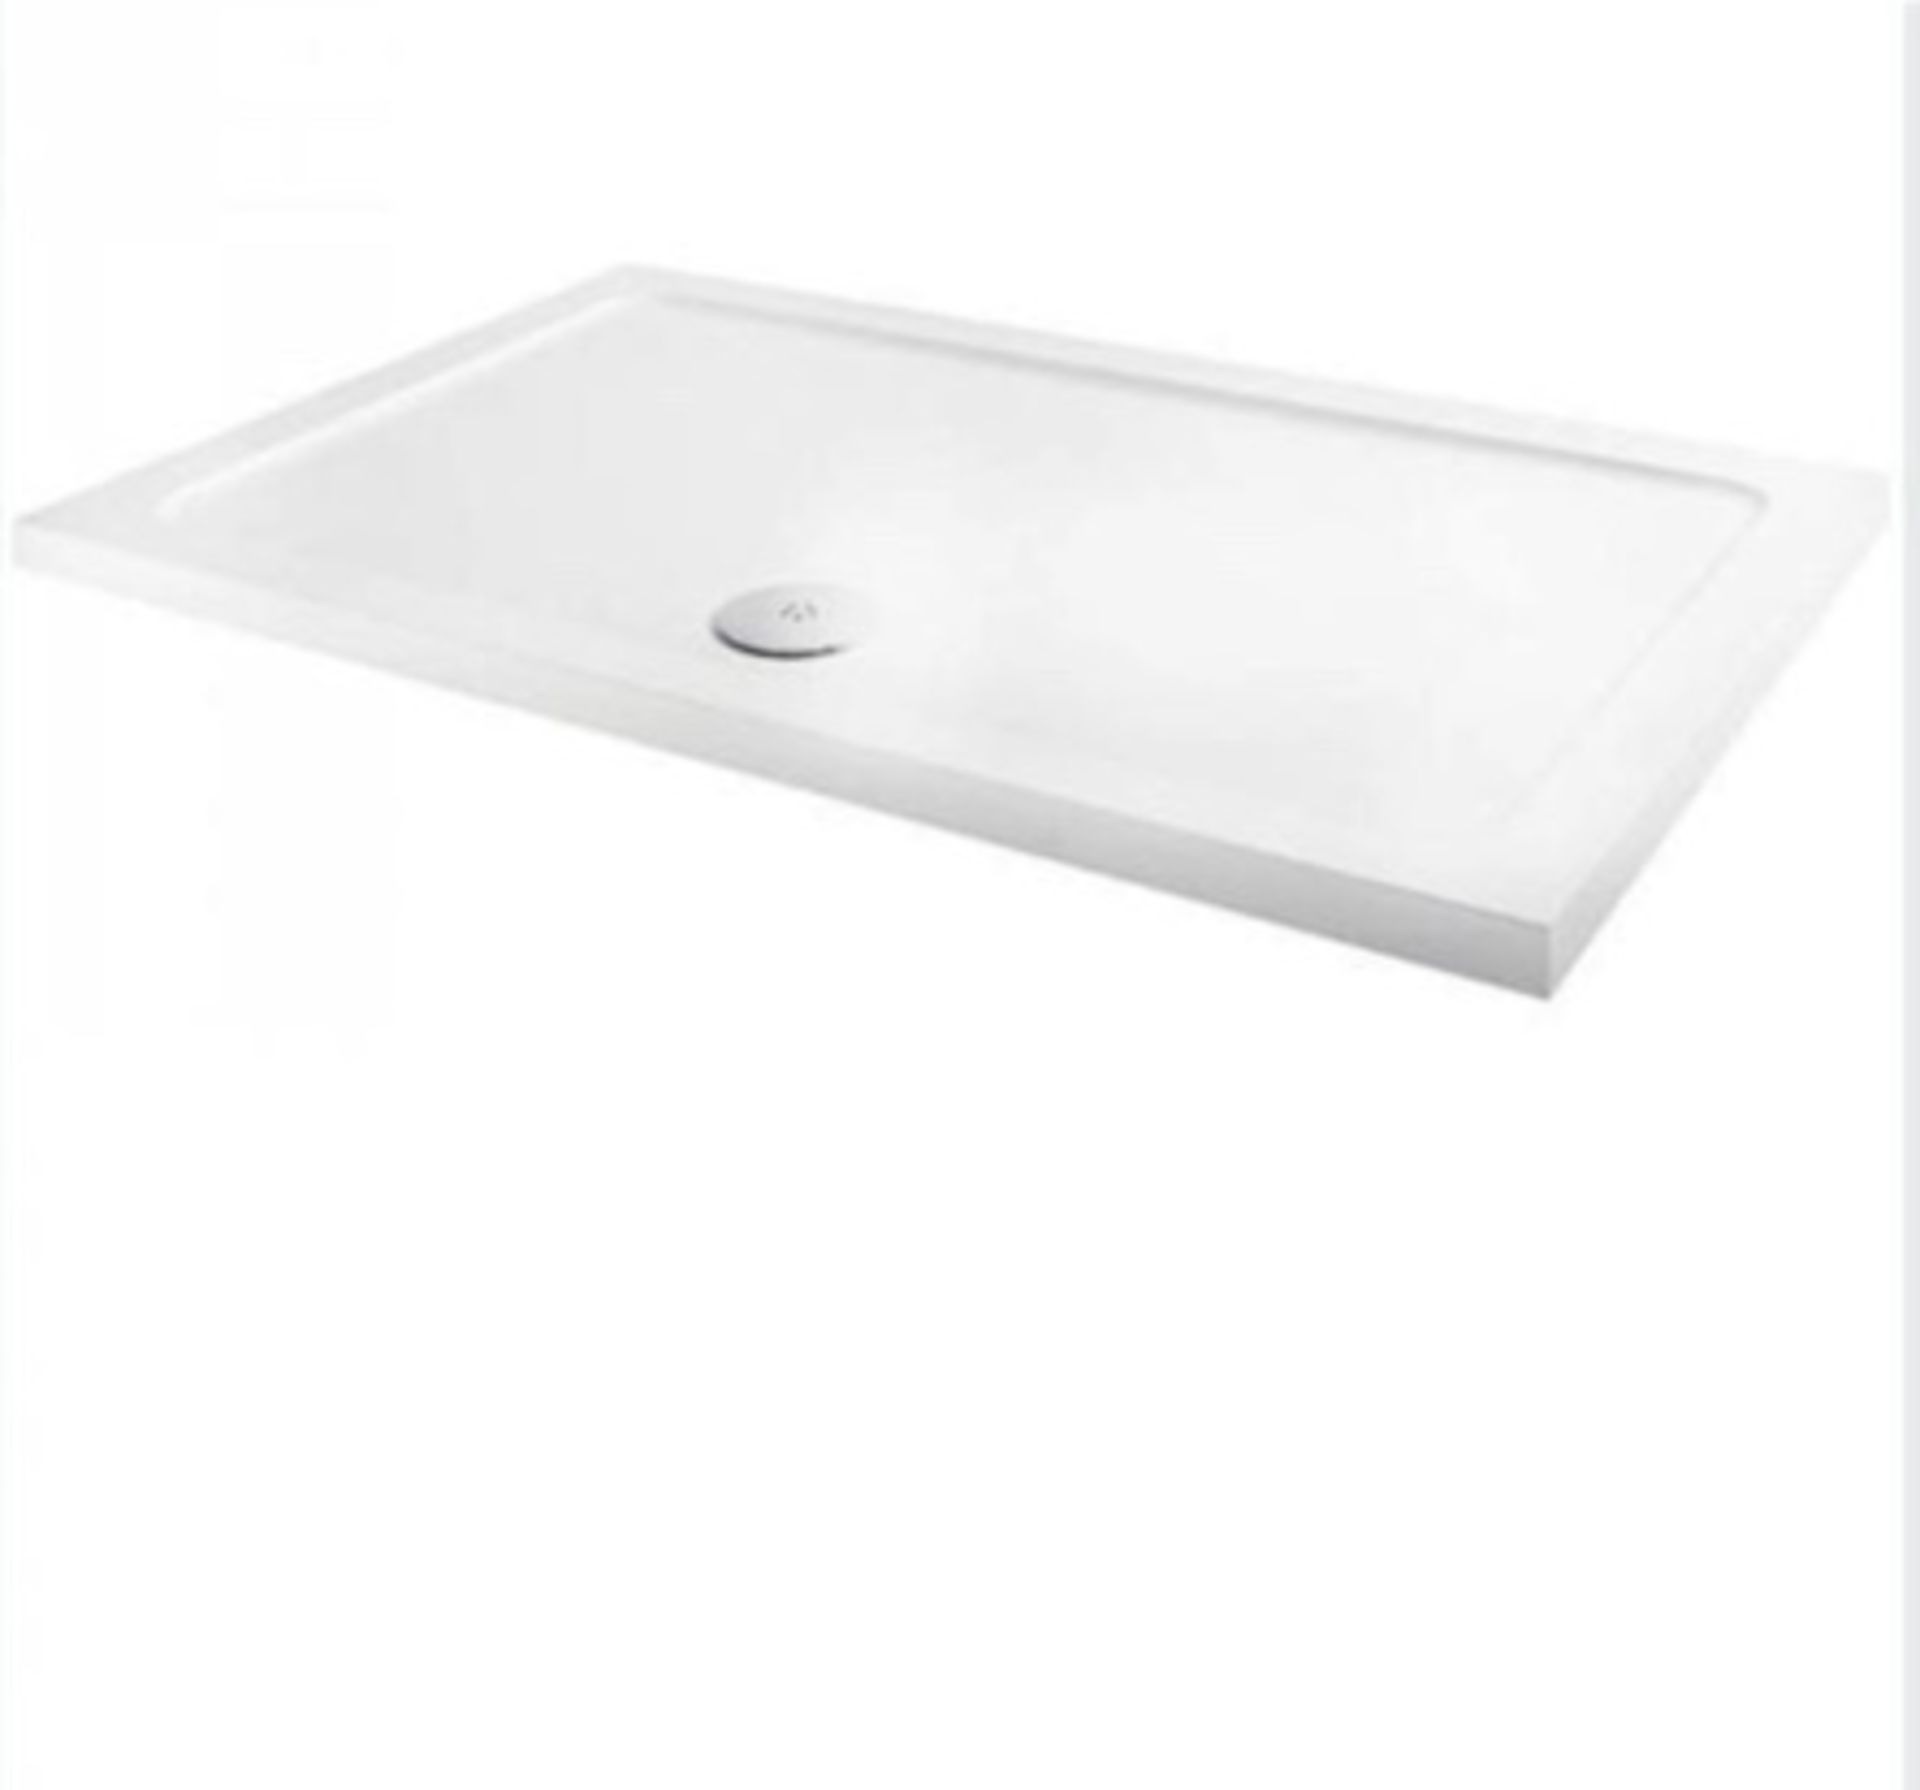 Ducostone Shower Tray 1400 x 800 (slight damage on one corner) RRP £232.56 **NO VAT**